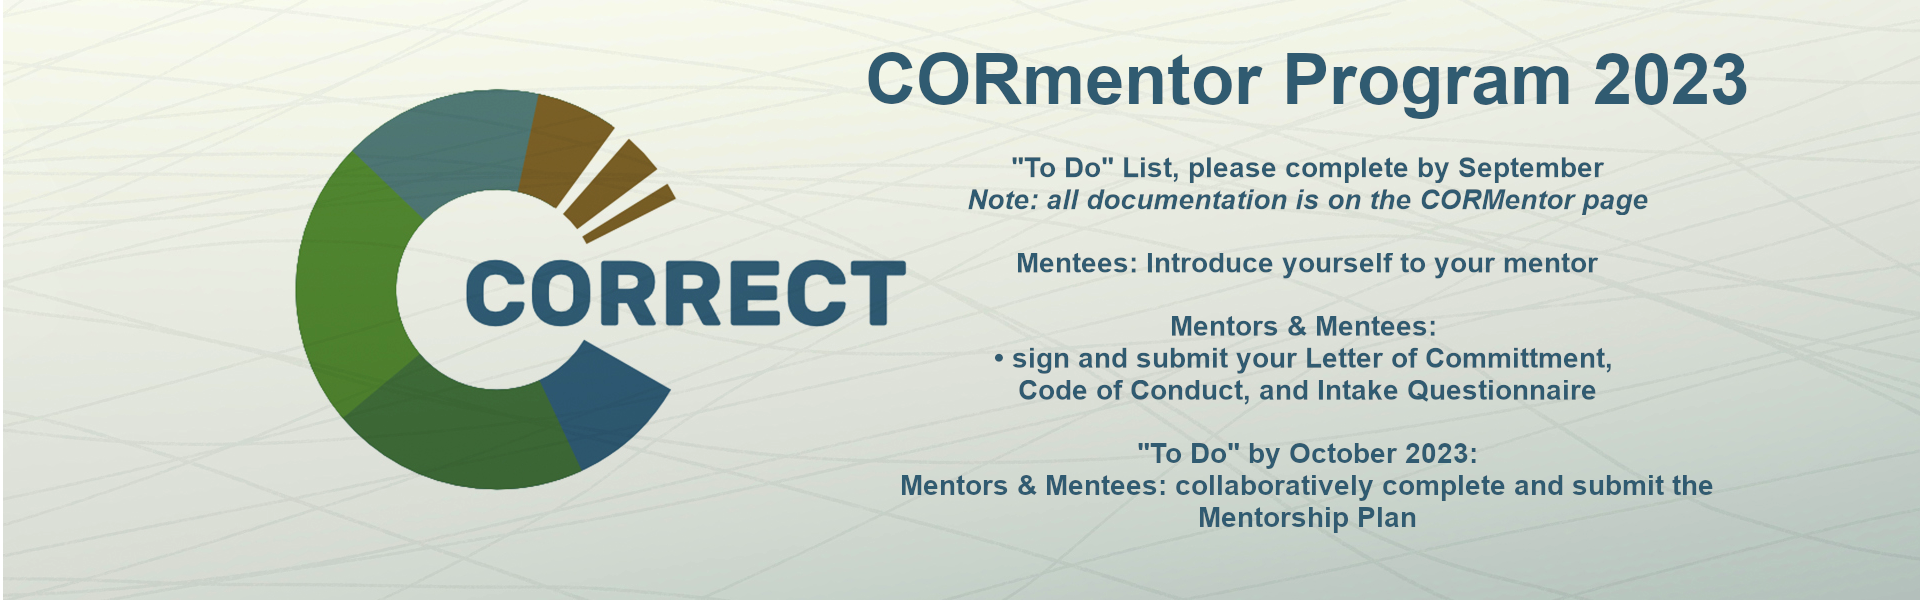 CORmentor: to-do list